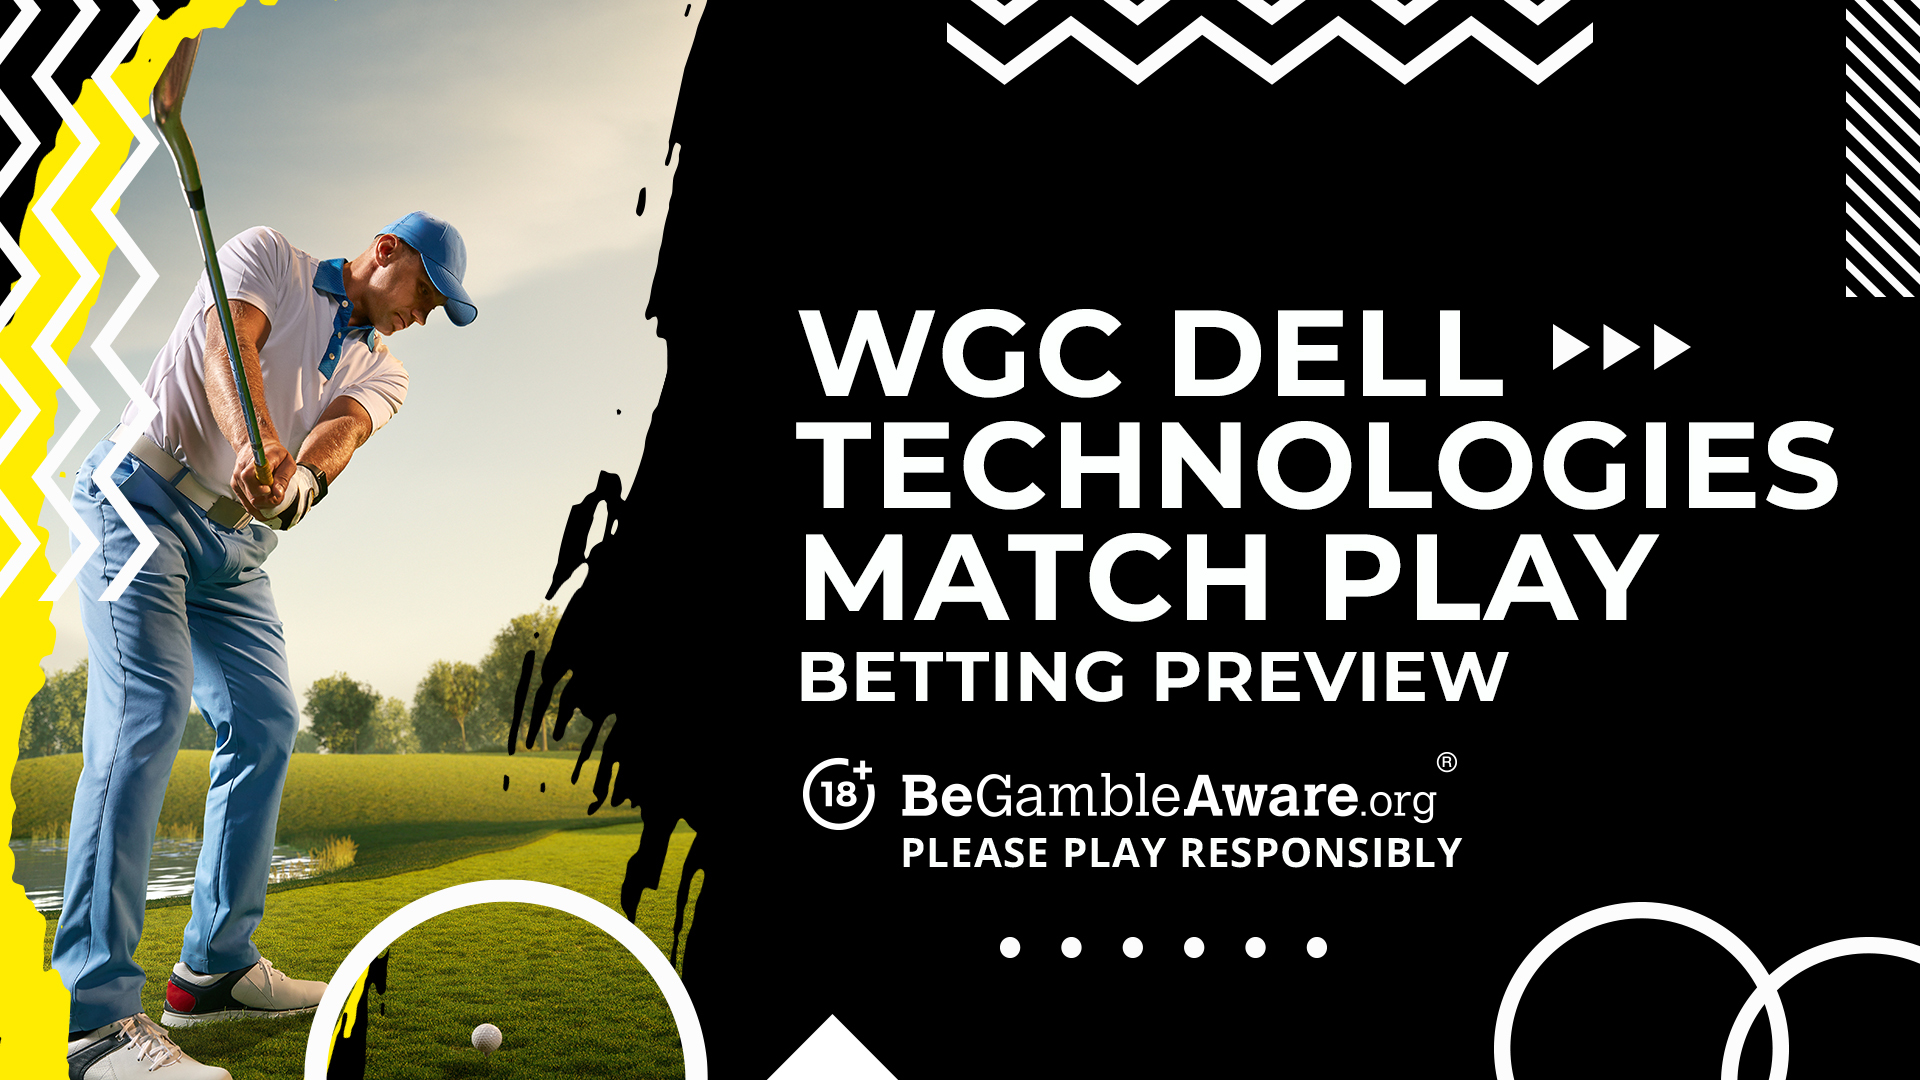 Photo: world matchplay golf betting tips